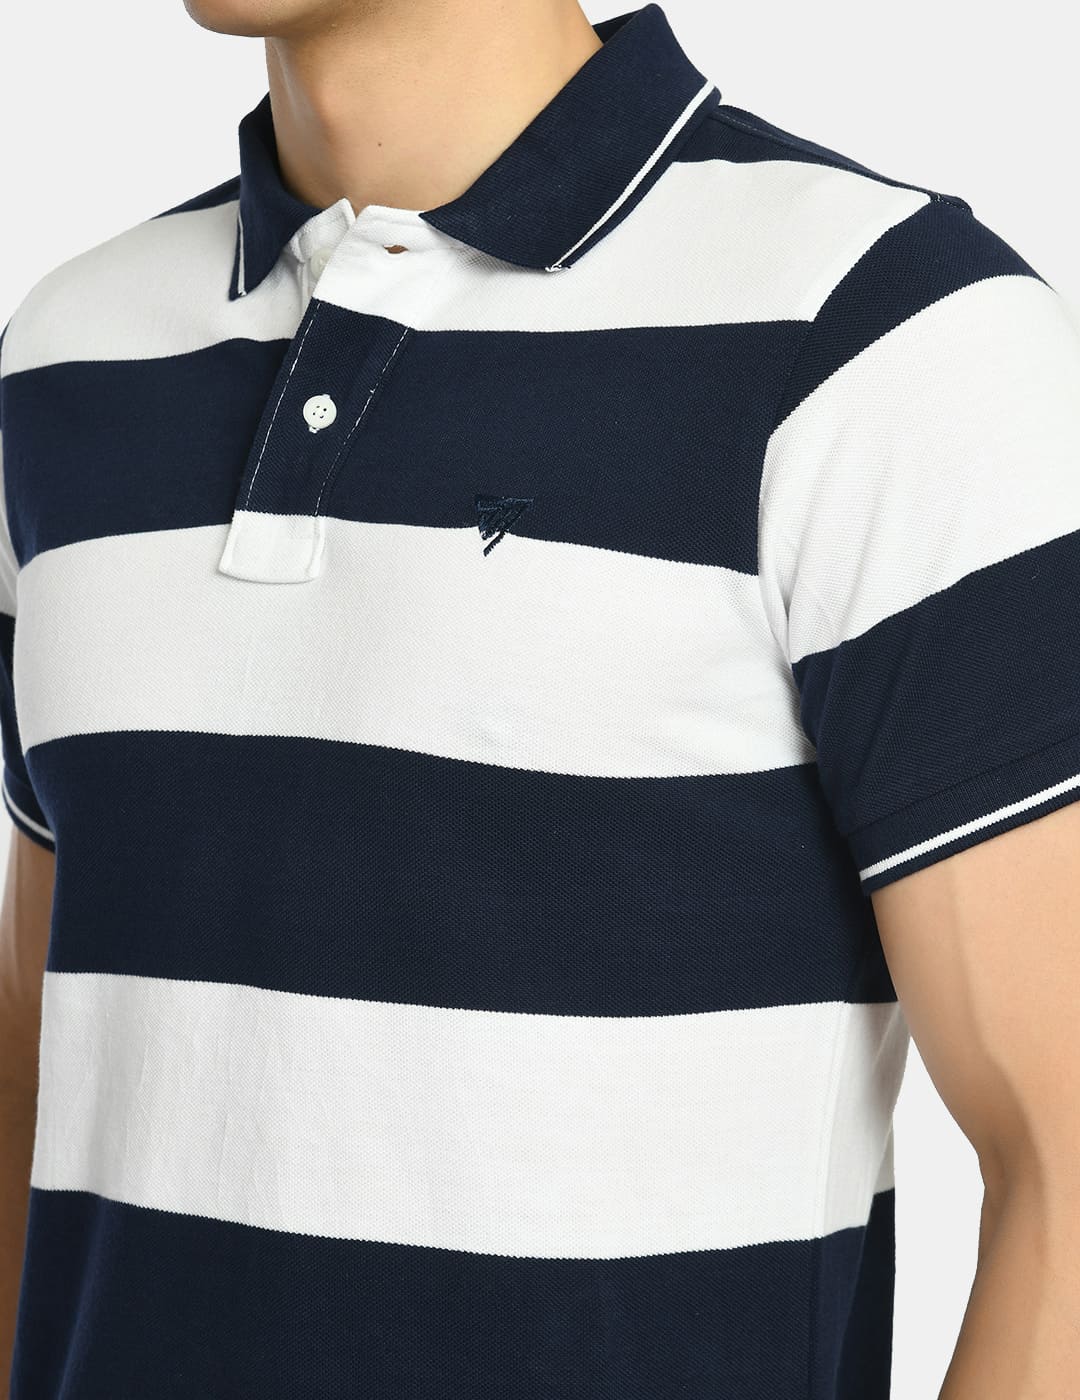 Men's Striped Nevy White Polo T-Shirt